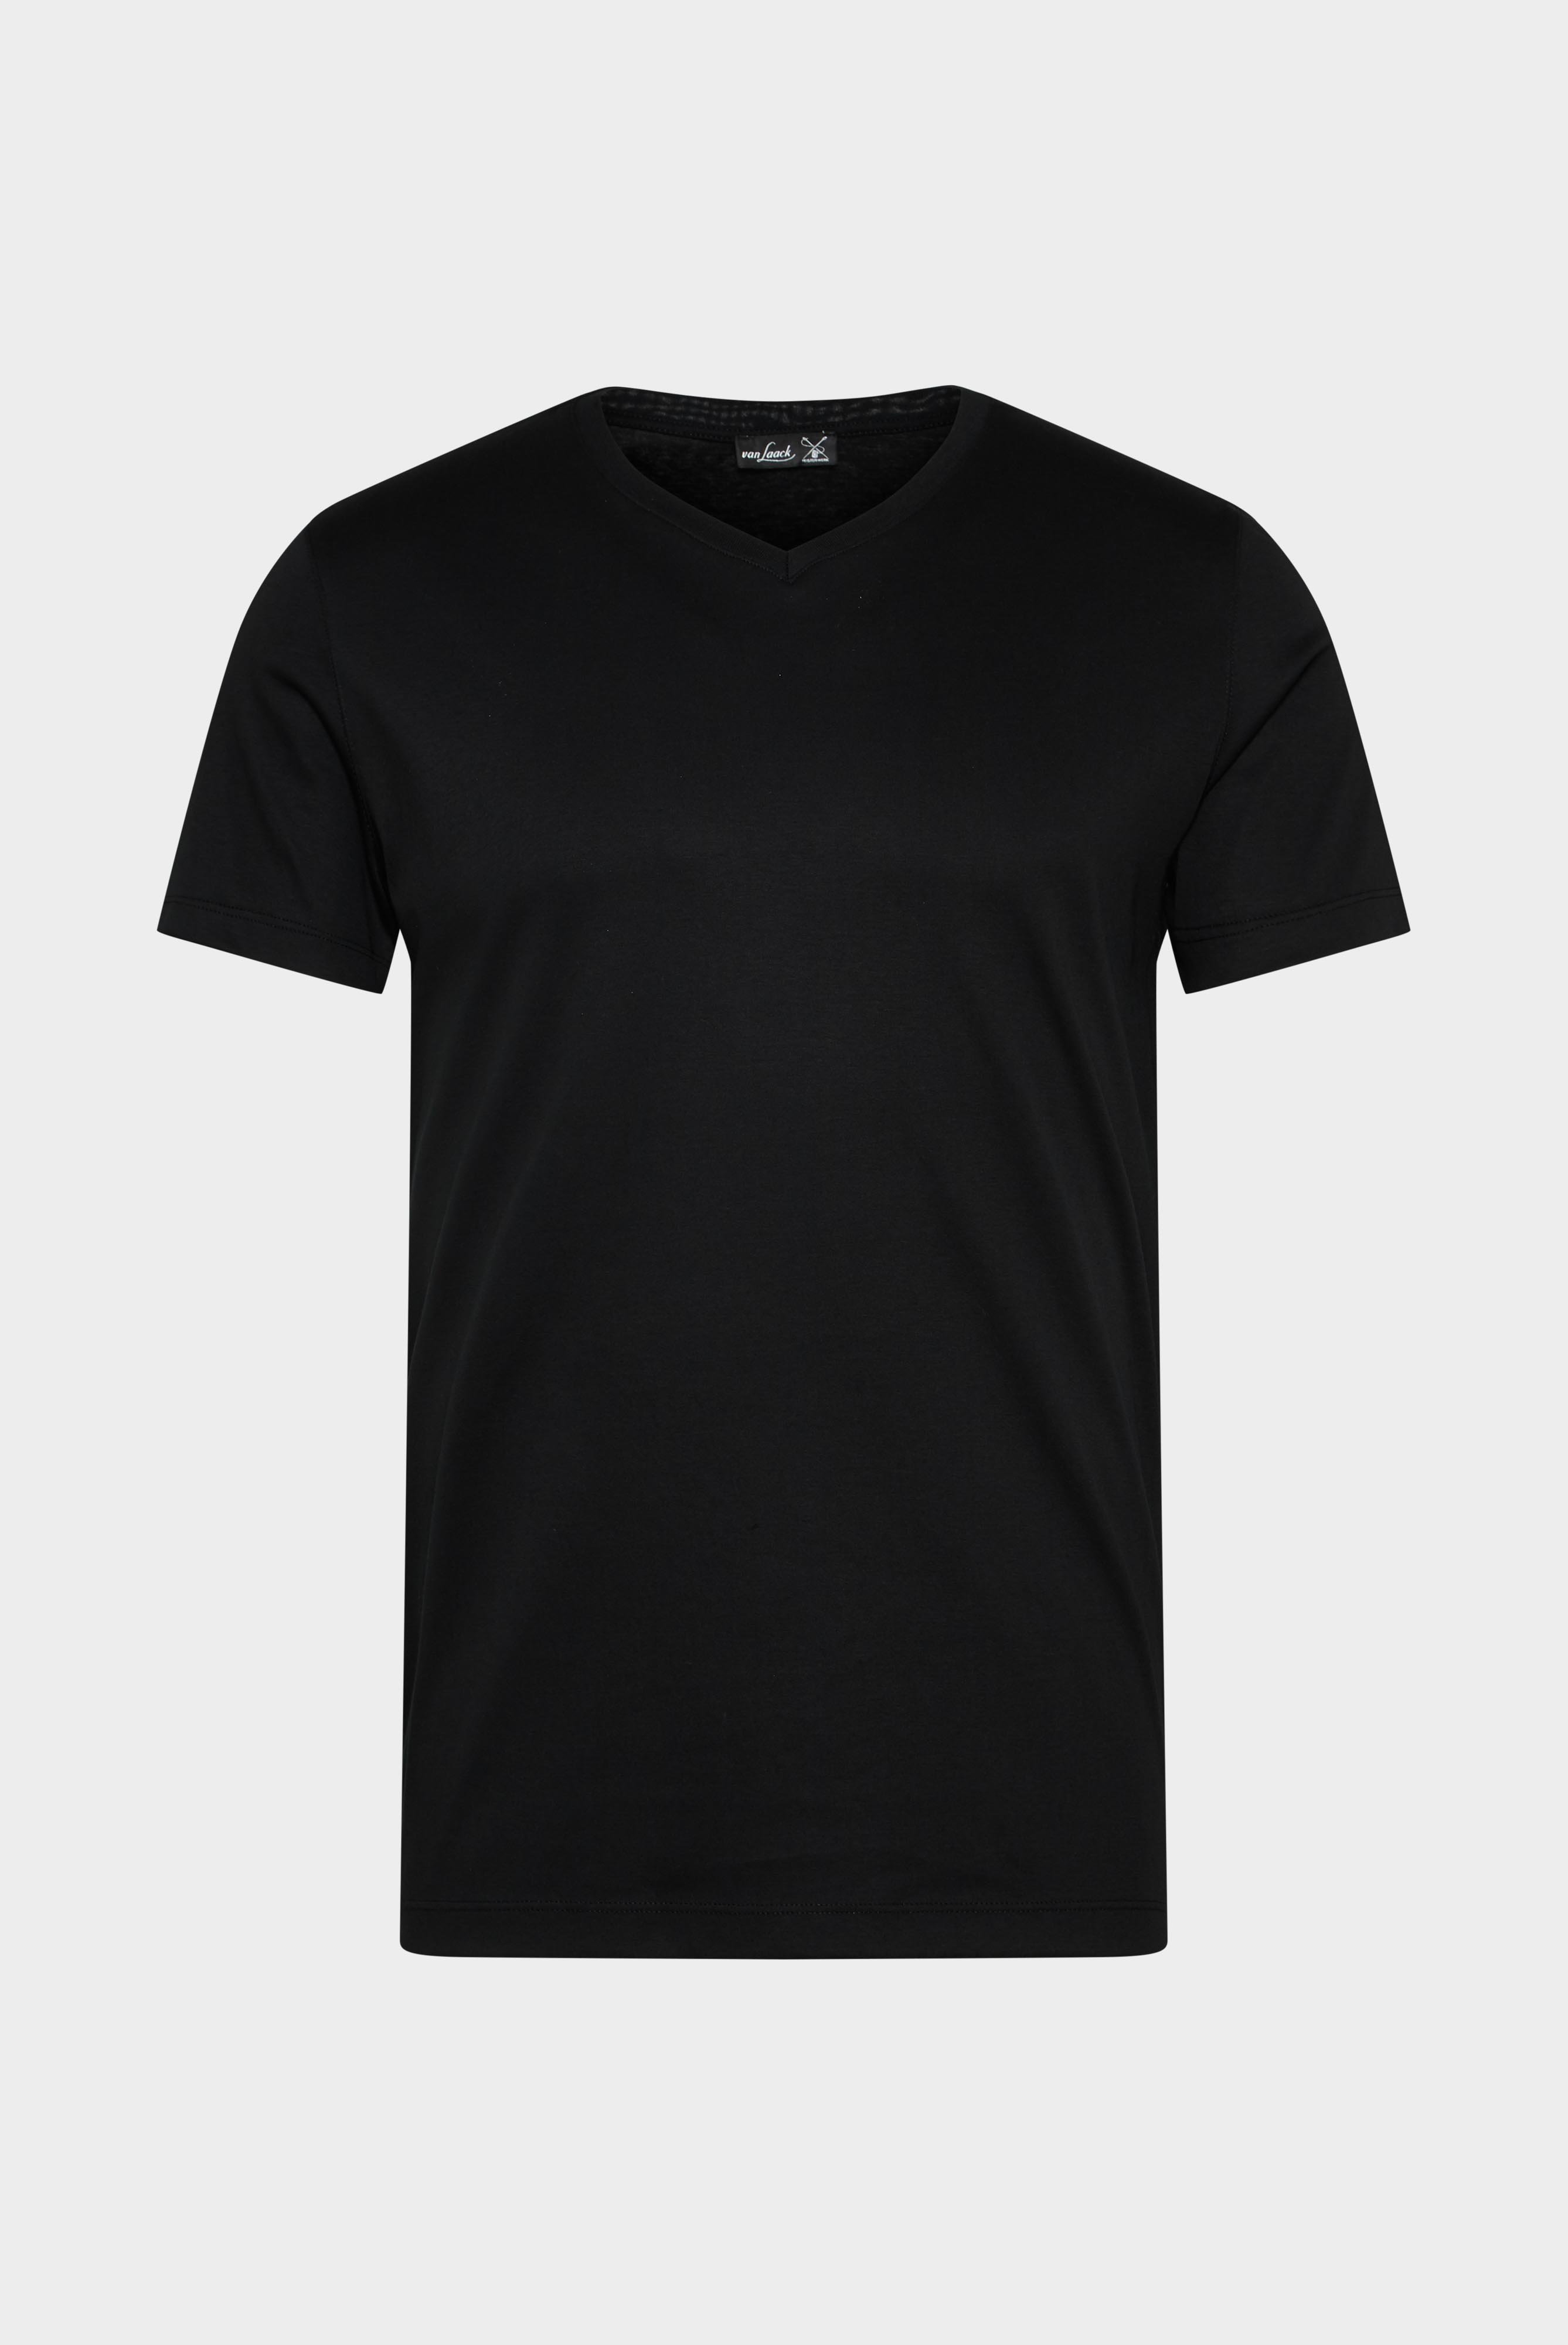 T-Shirts+Plain Luxurious Swiss Cotton Jersey V-Neck T-Shirt+20.1715.UX.180031.099.XS